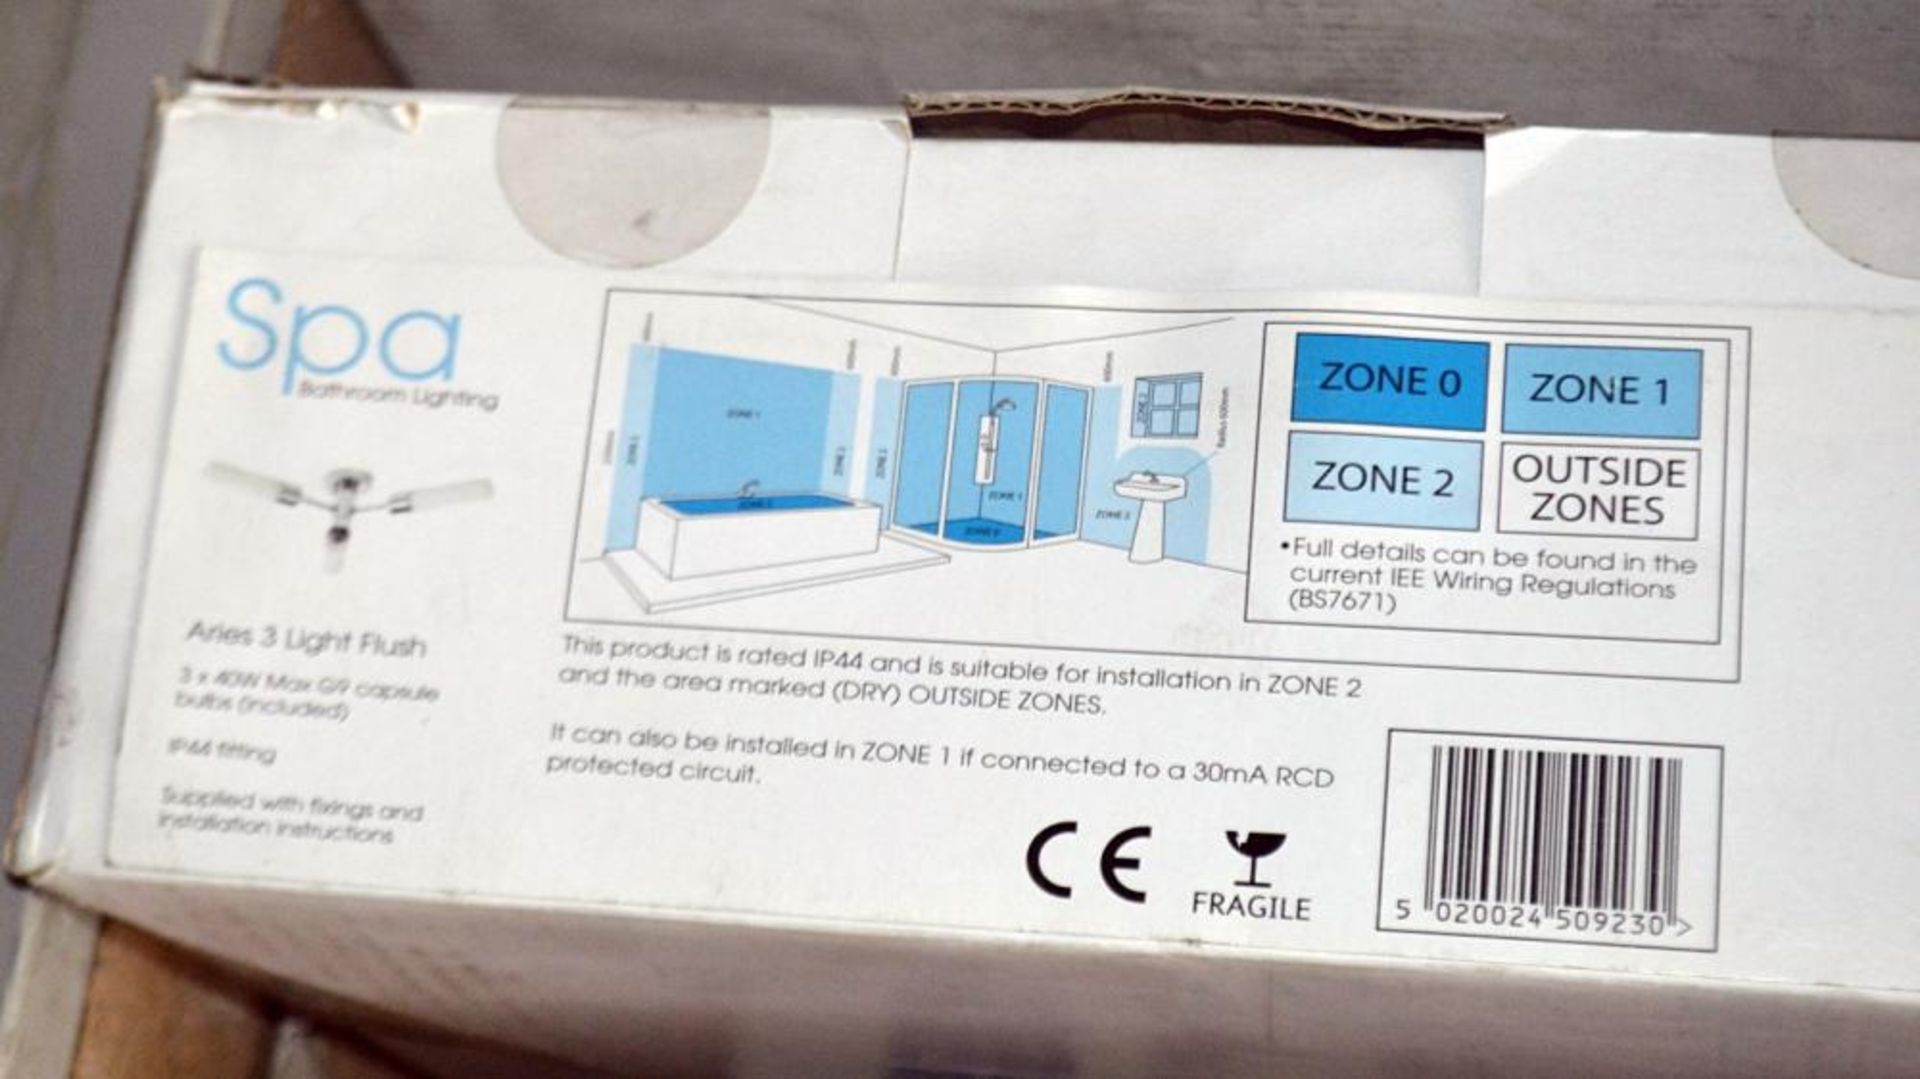 1 x SPA Aries 3-Light Flush Bathroom Light Fitting IP44 120W - New/Unused Boxed Stock - (12432) - Image 2 of 2